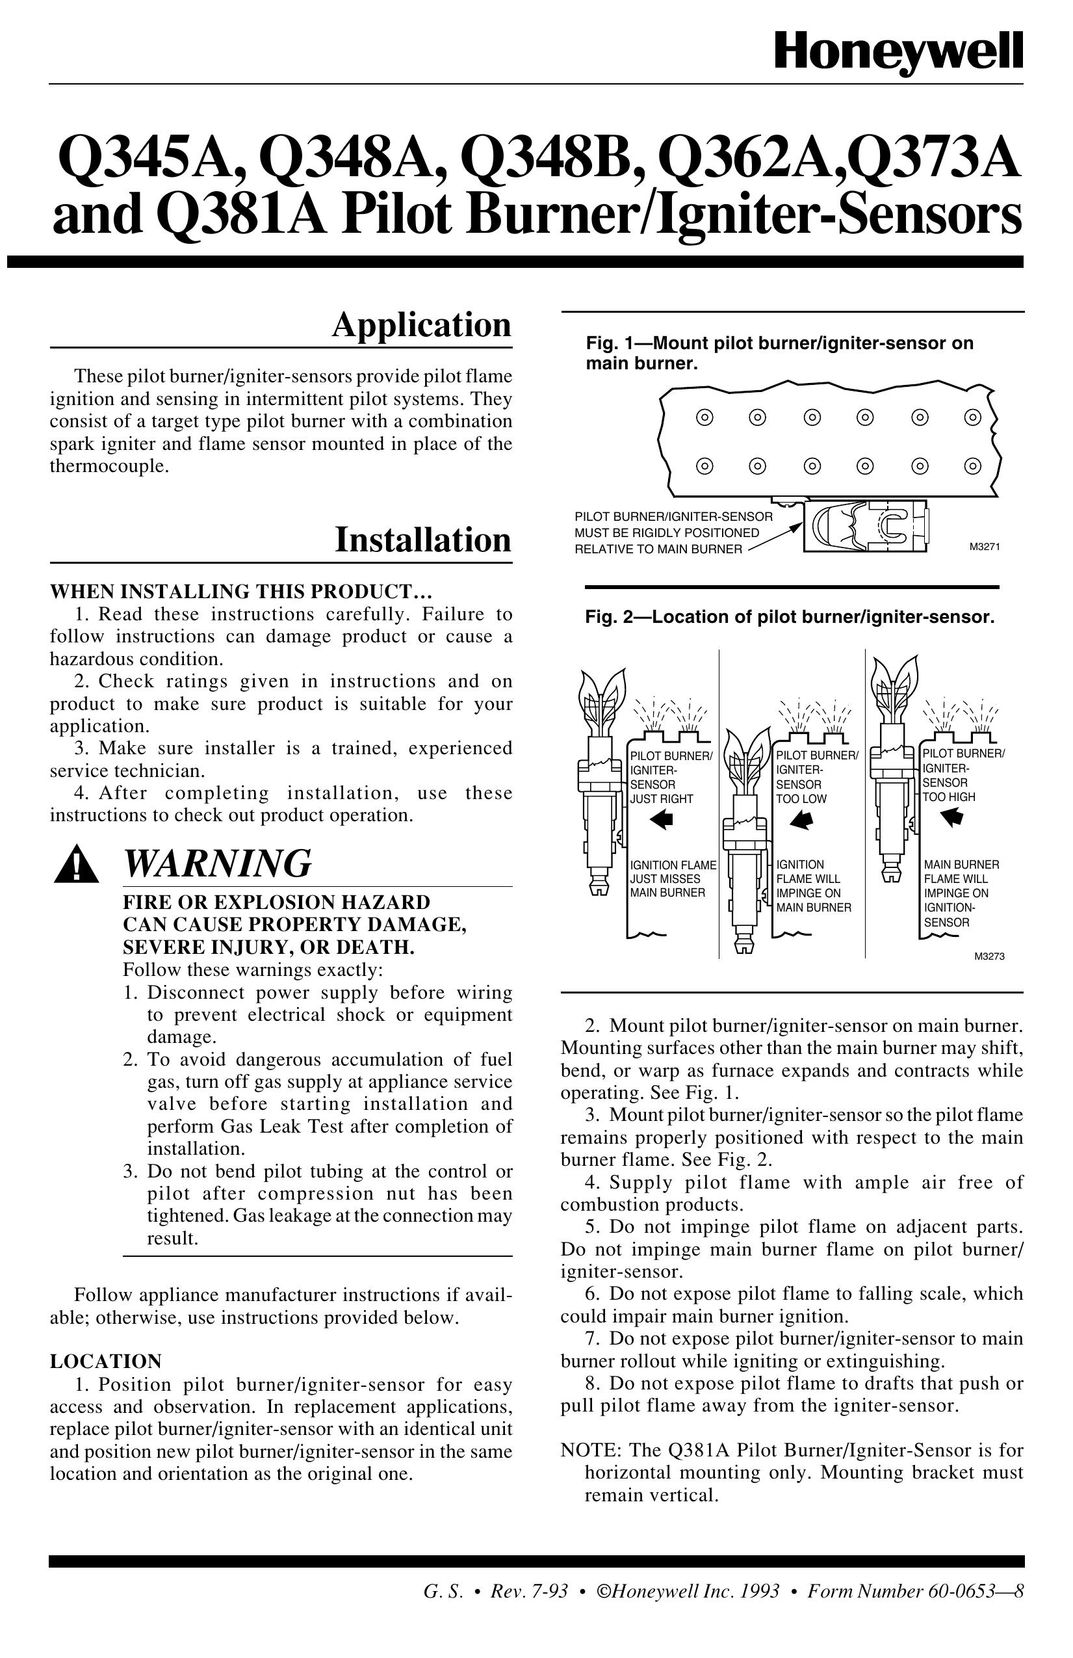 Honeywell Q348A Burner User Manual